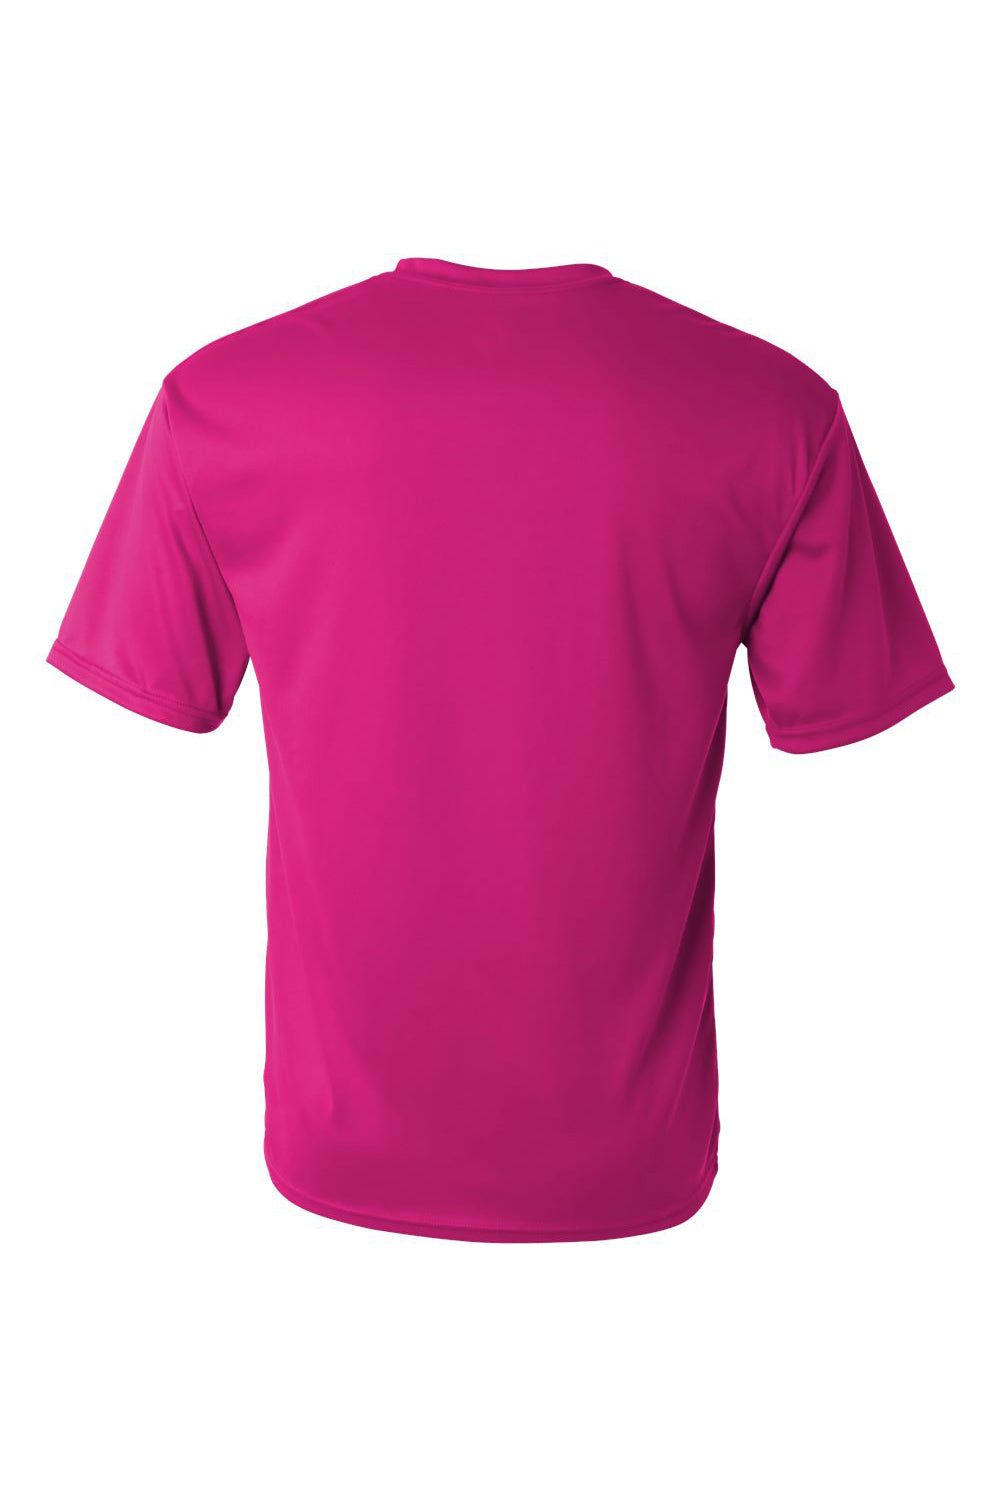 C2 Sport 5100 Mens Performance Moisture Wicking Short Sleeve Crewneck T-Shirt Hot Pink Flat Back